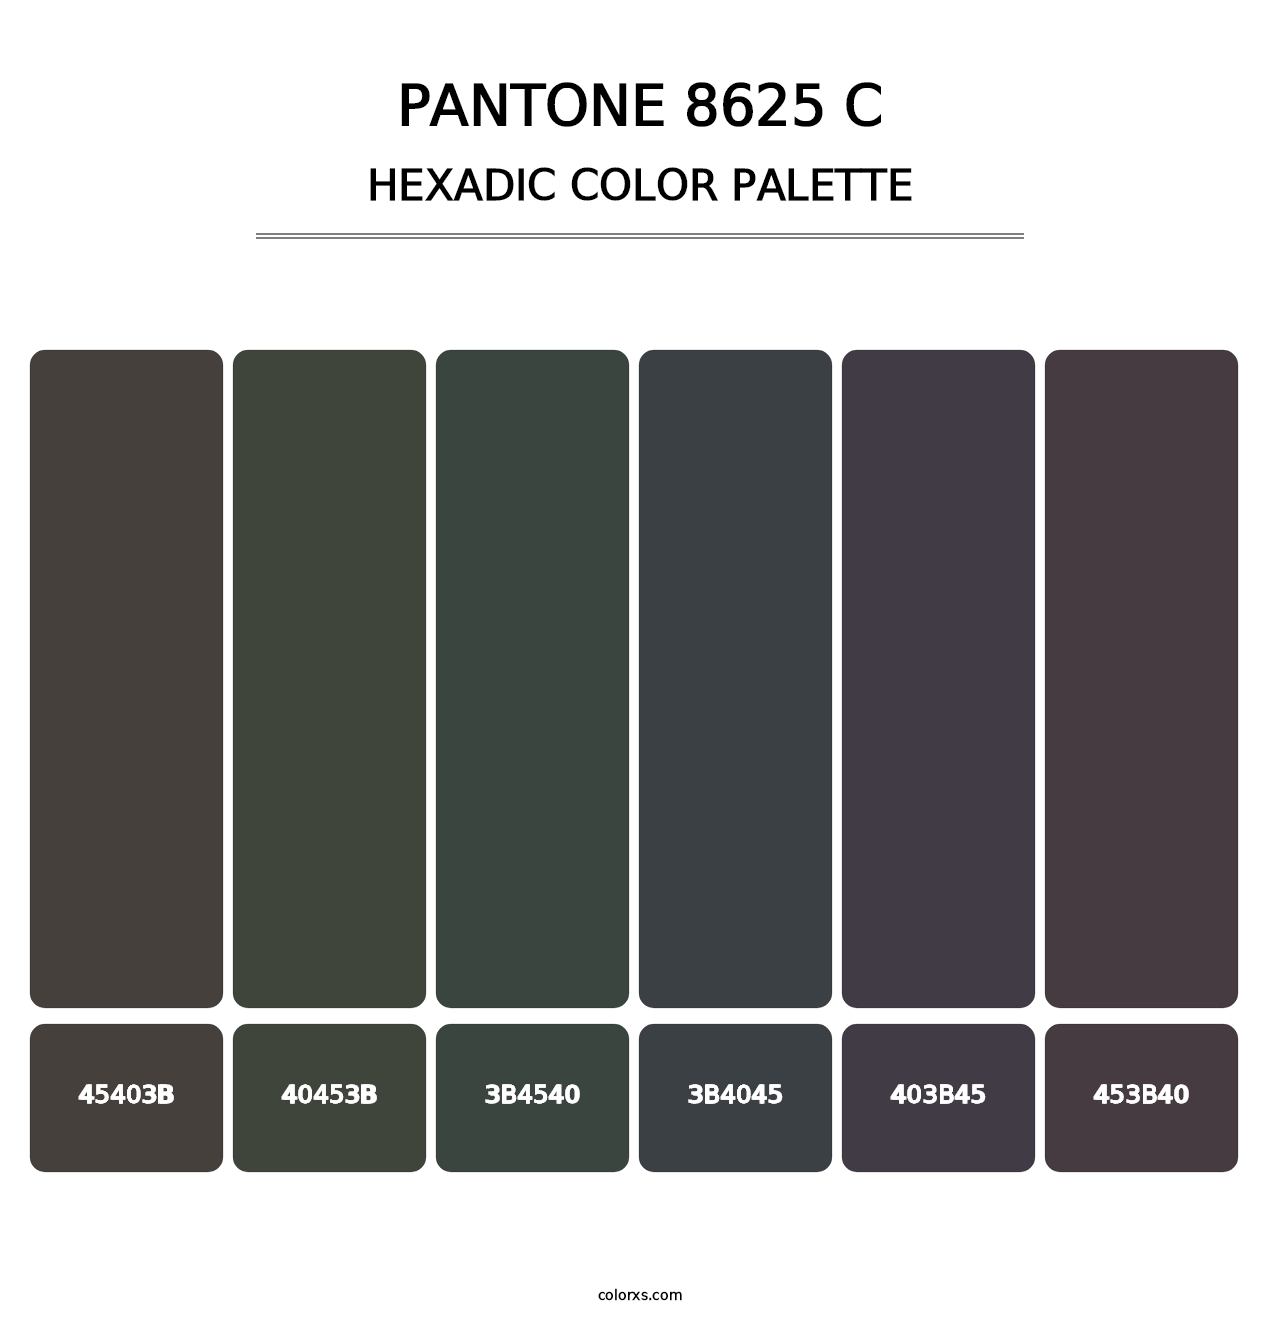 PANTONE 8625 C - Hexadic Color Palette